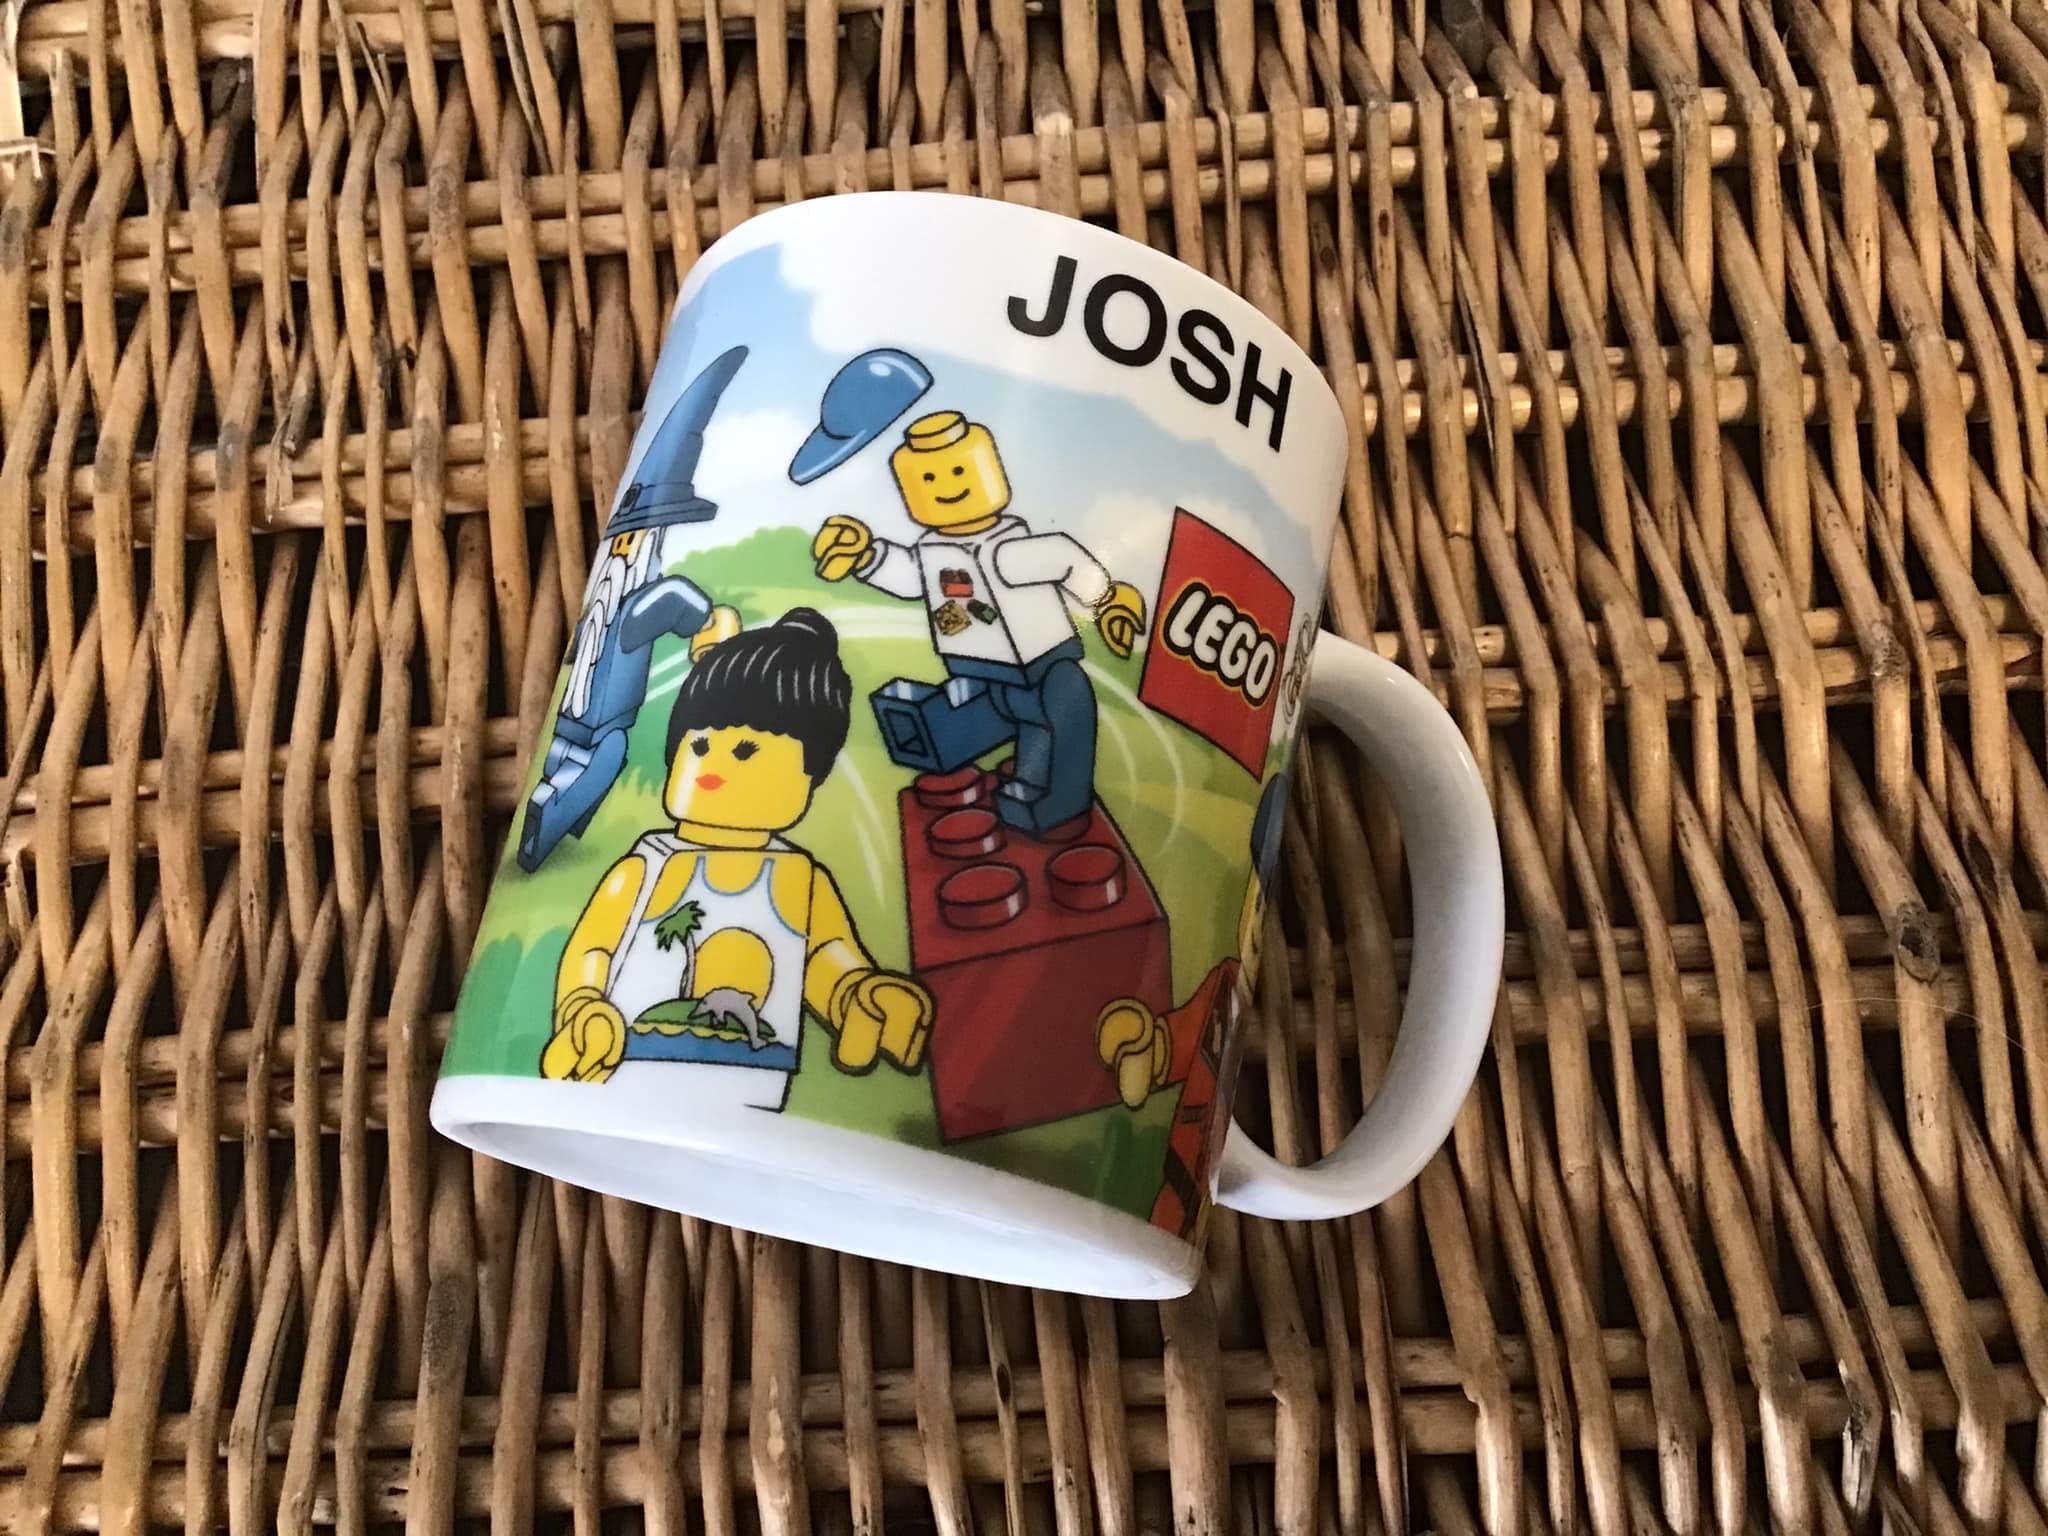 Lego Coffee Mug Tea Cup Hot Chocolate Personalized JOSH Kitchen Home Decor.  -  Hong Kong